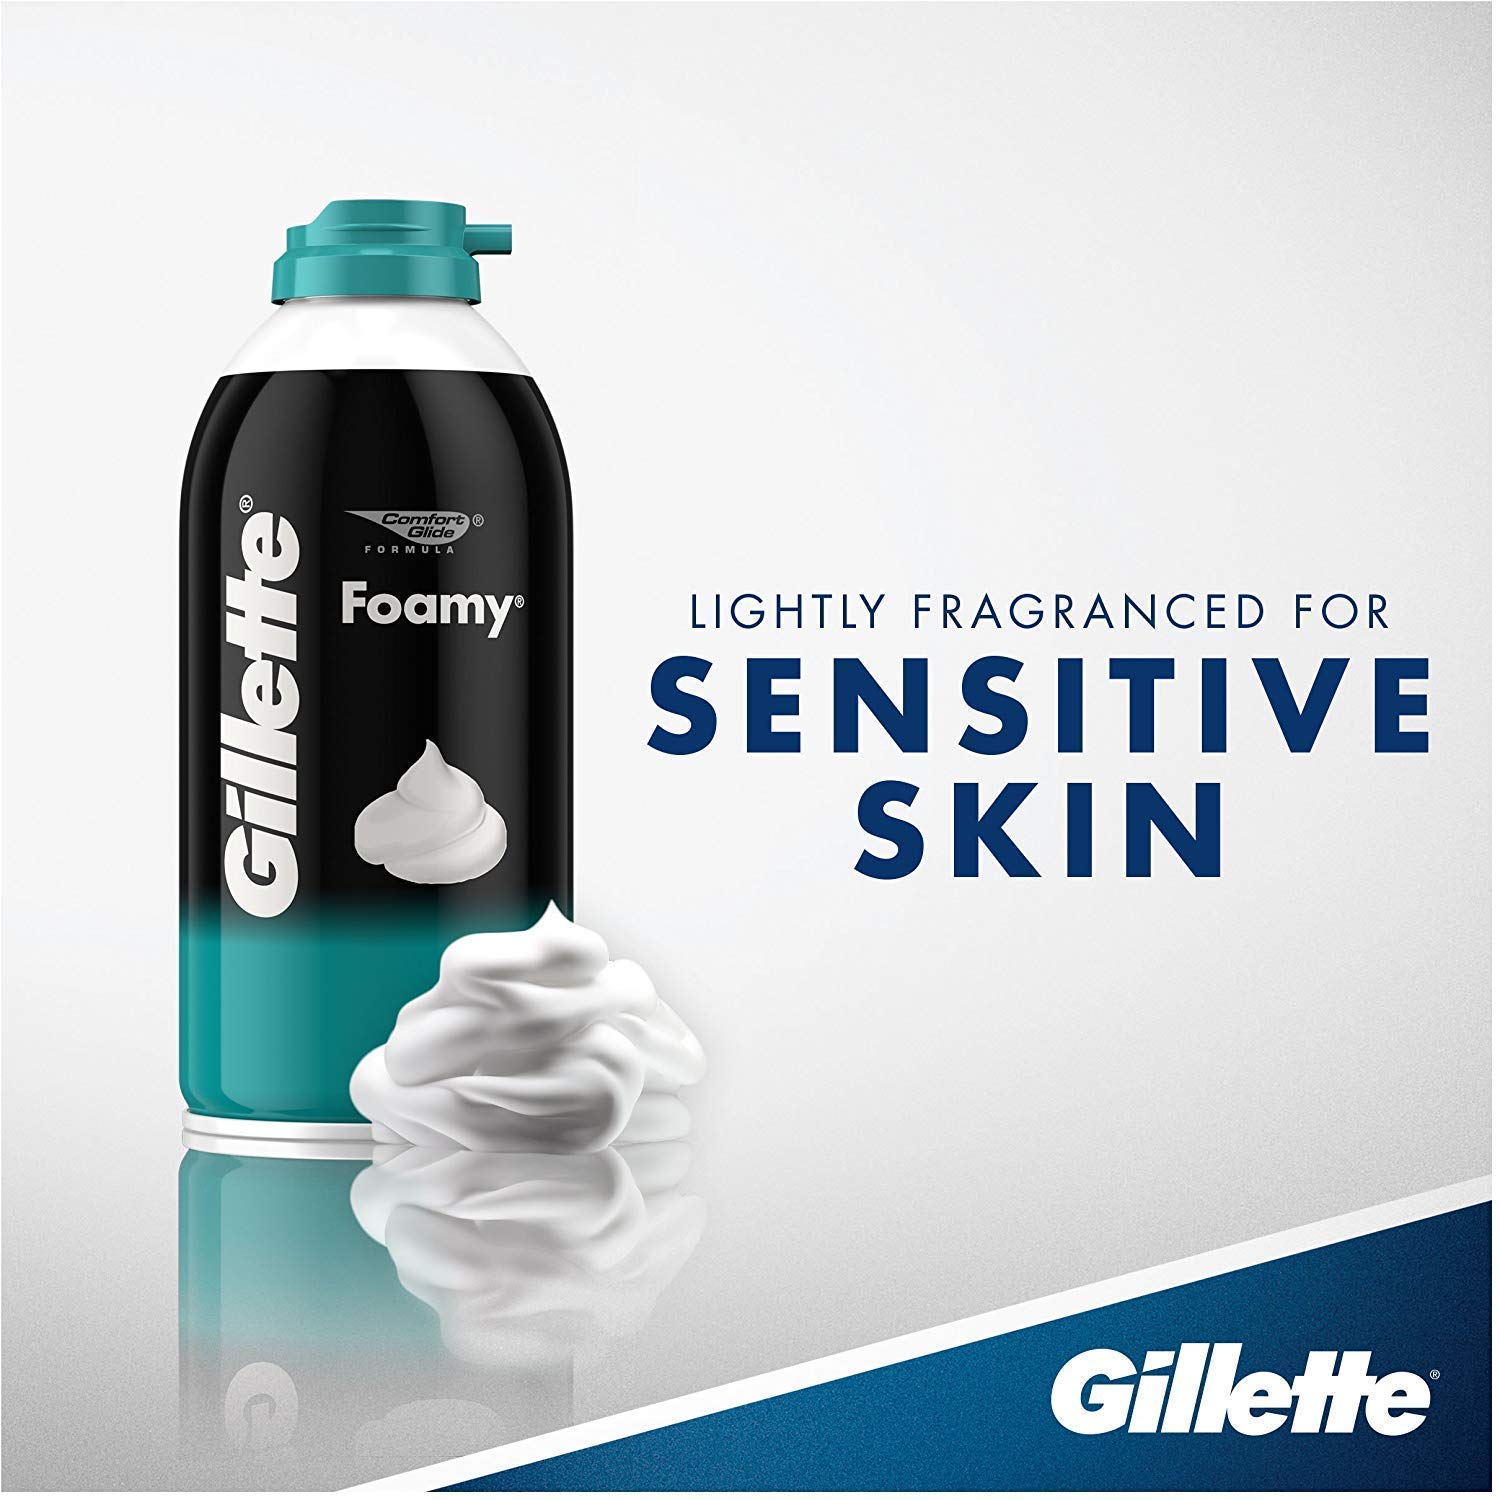 Gillette Foamy Sensitive Sensible Shave Foam